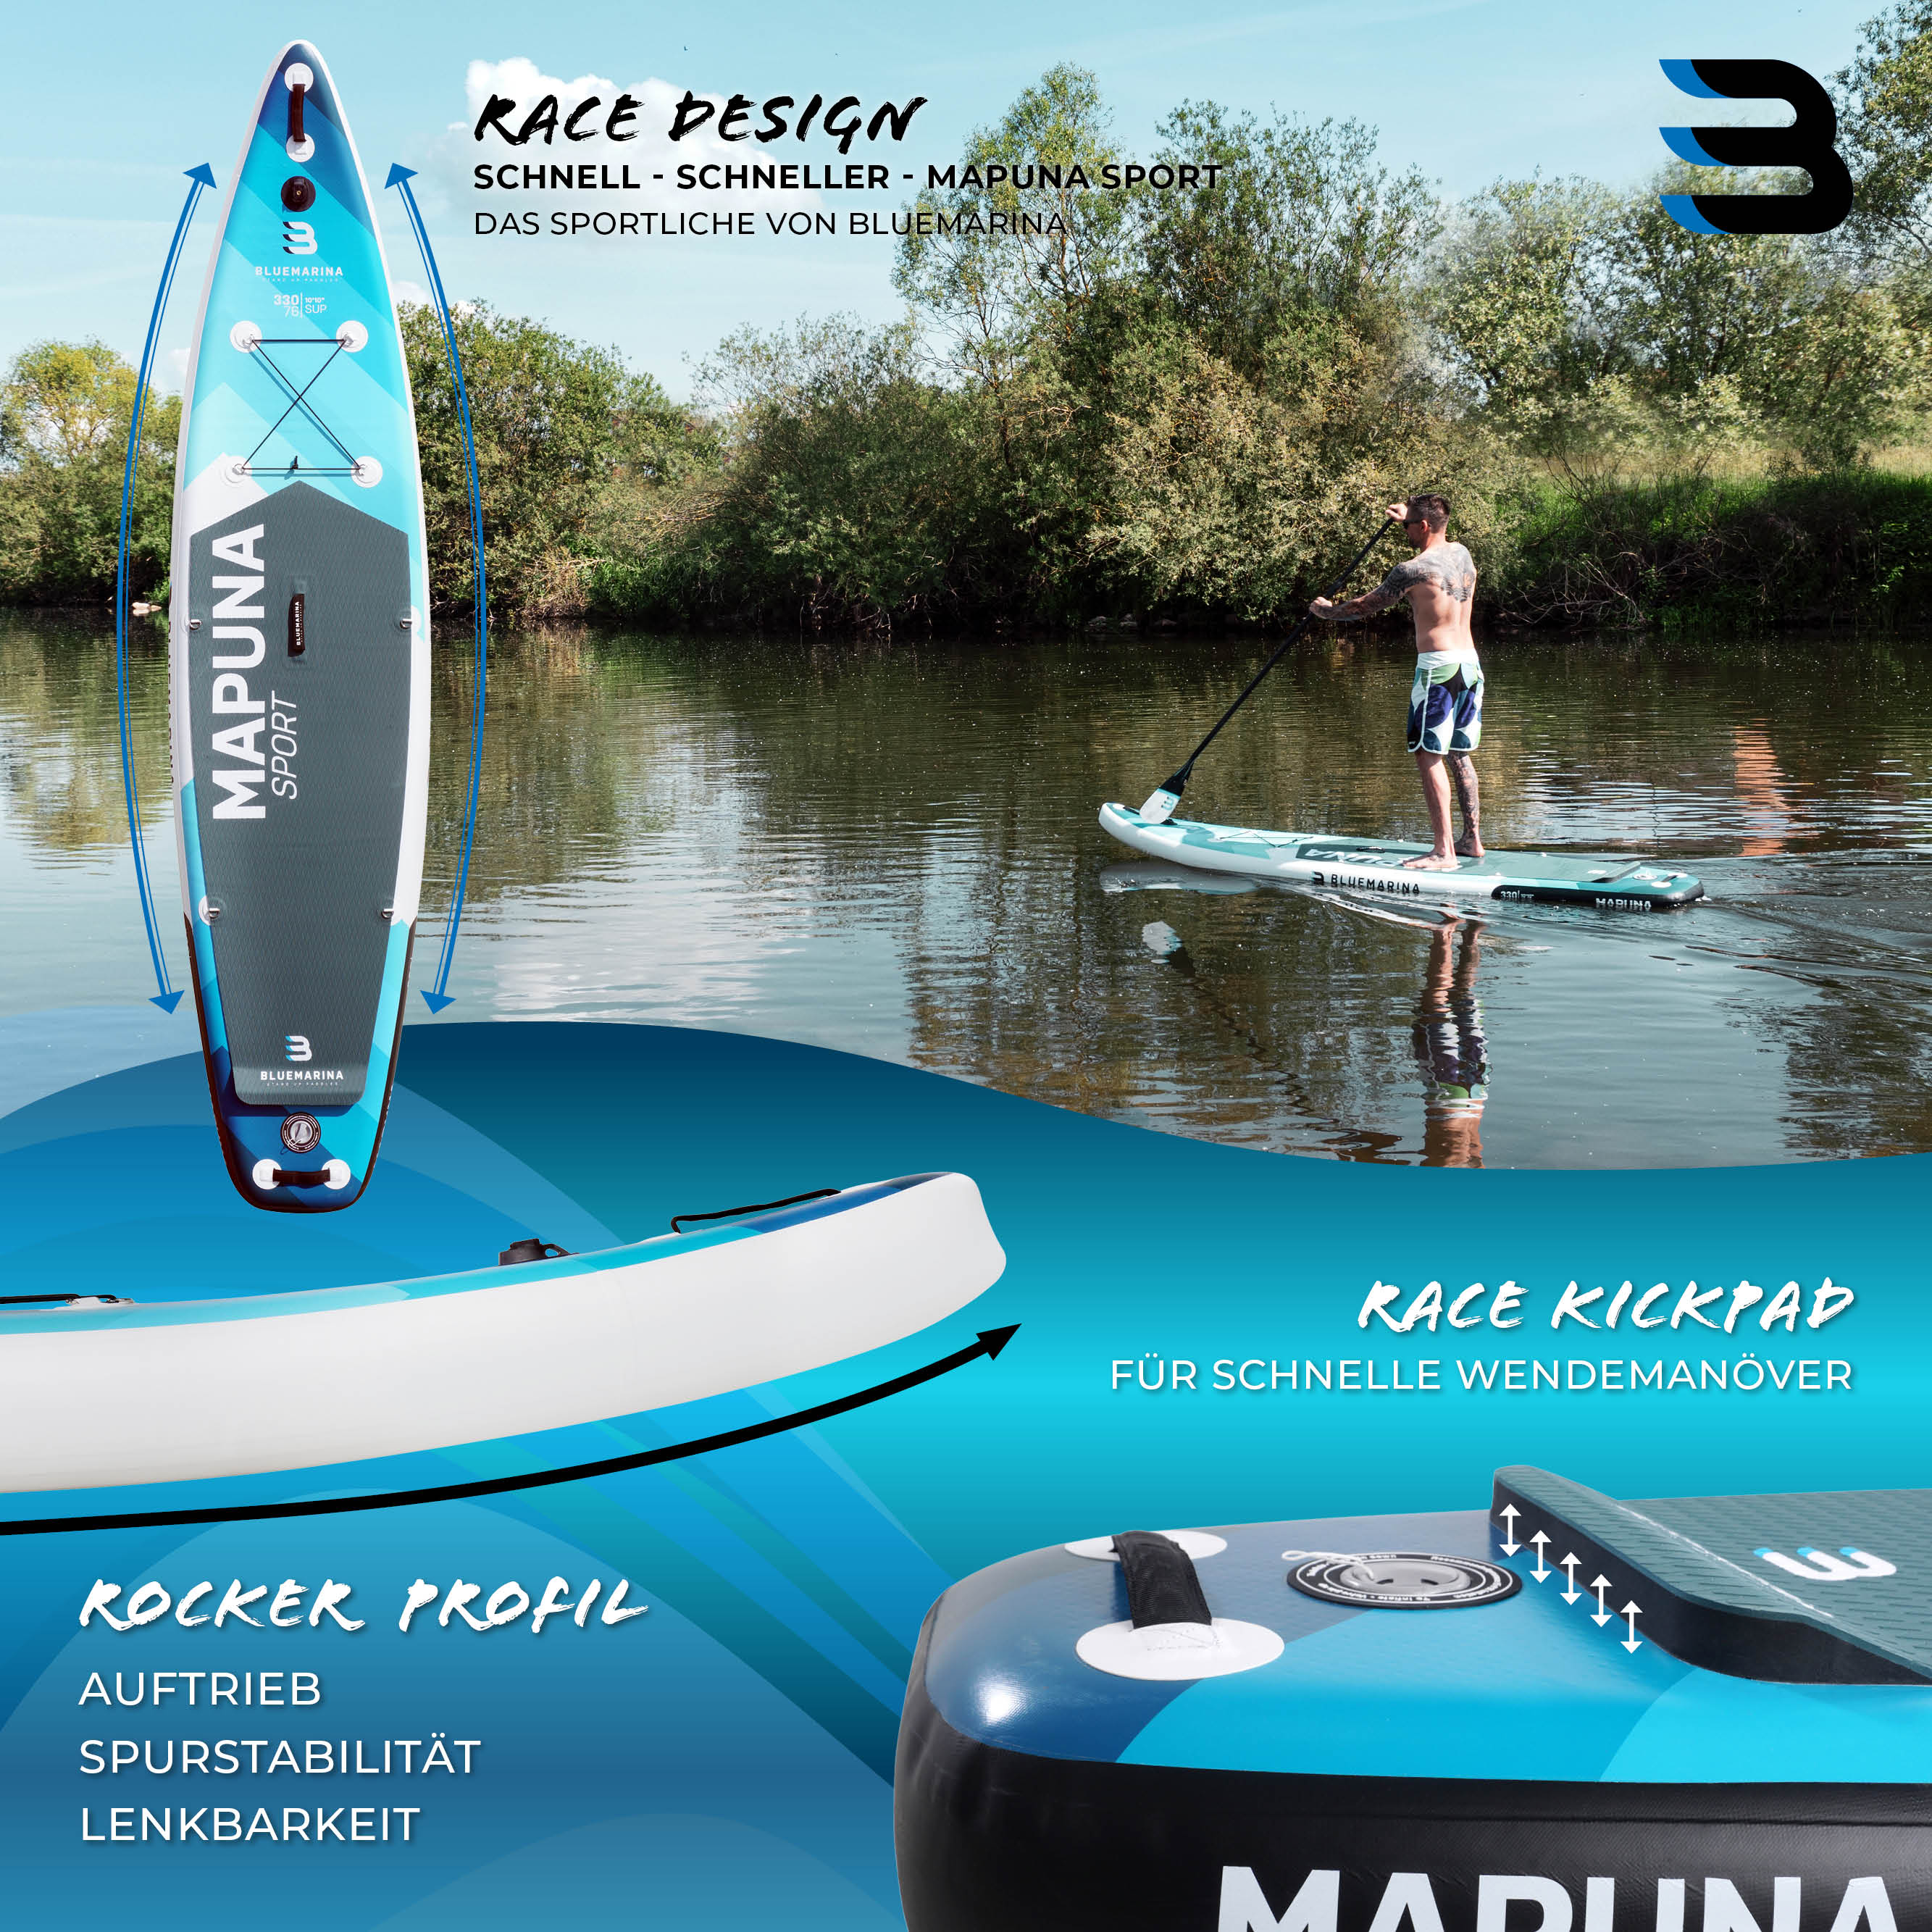 BLUEMARINA SUP Board schwarz 2022 Stand Up blau Paddle, Mapuna weiß